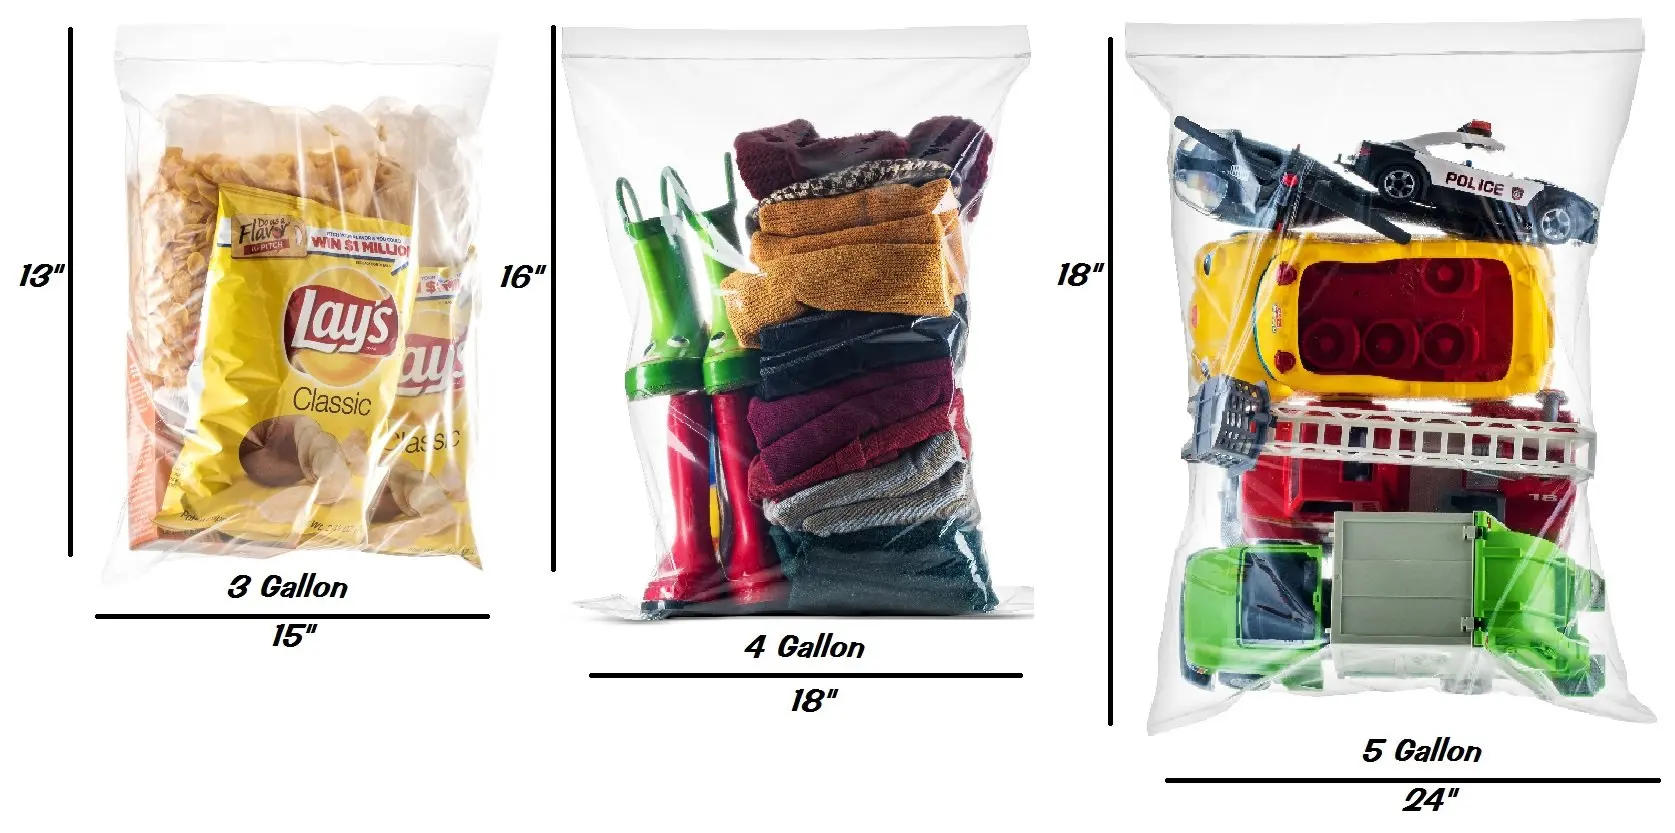 20 Count Regular Roaster Storage Ziplock Bag 16 x 18 4 Gallon Large /& Strong Clear Ziplock Bags Pack of 20